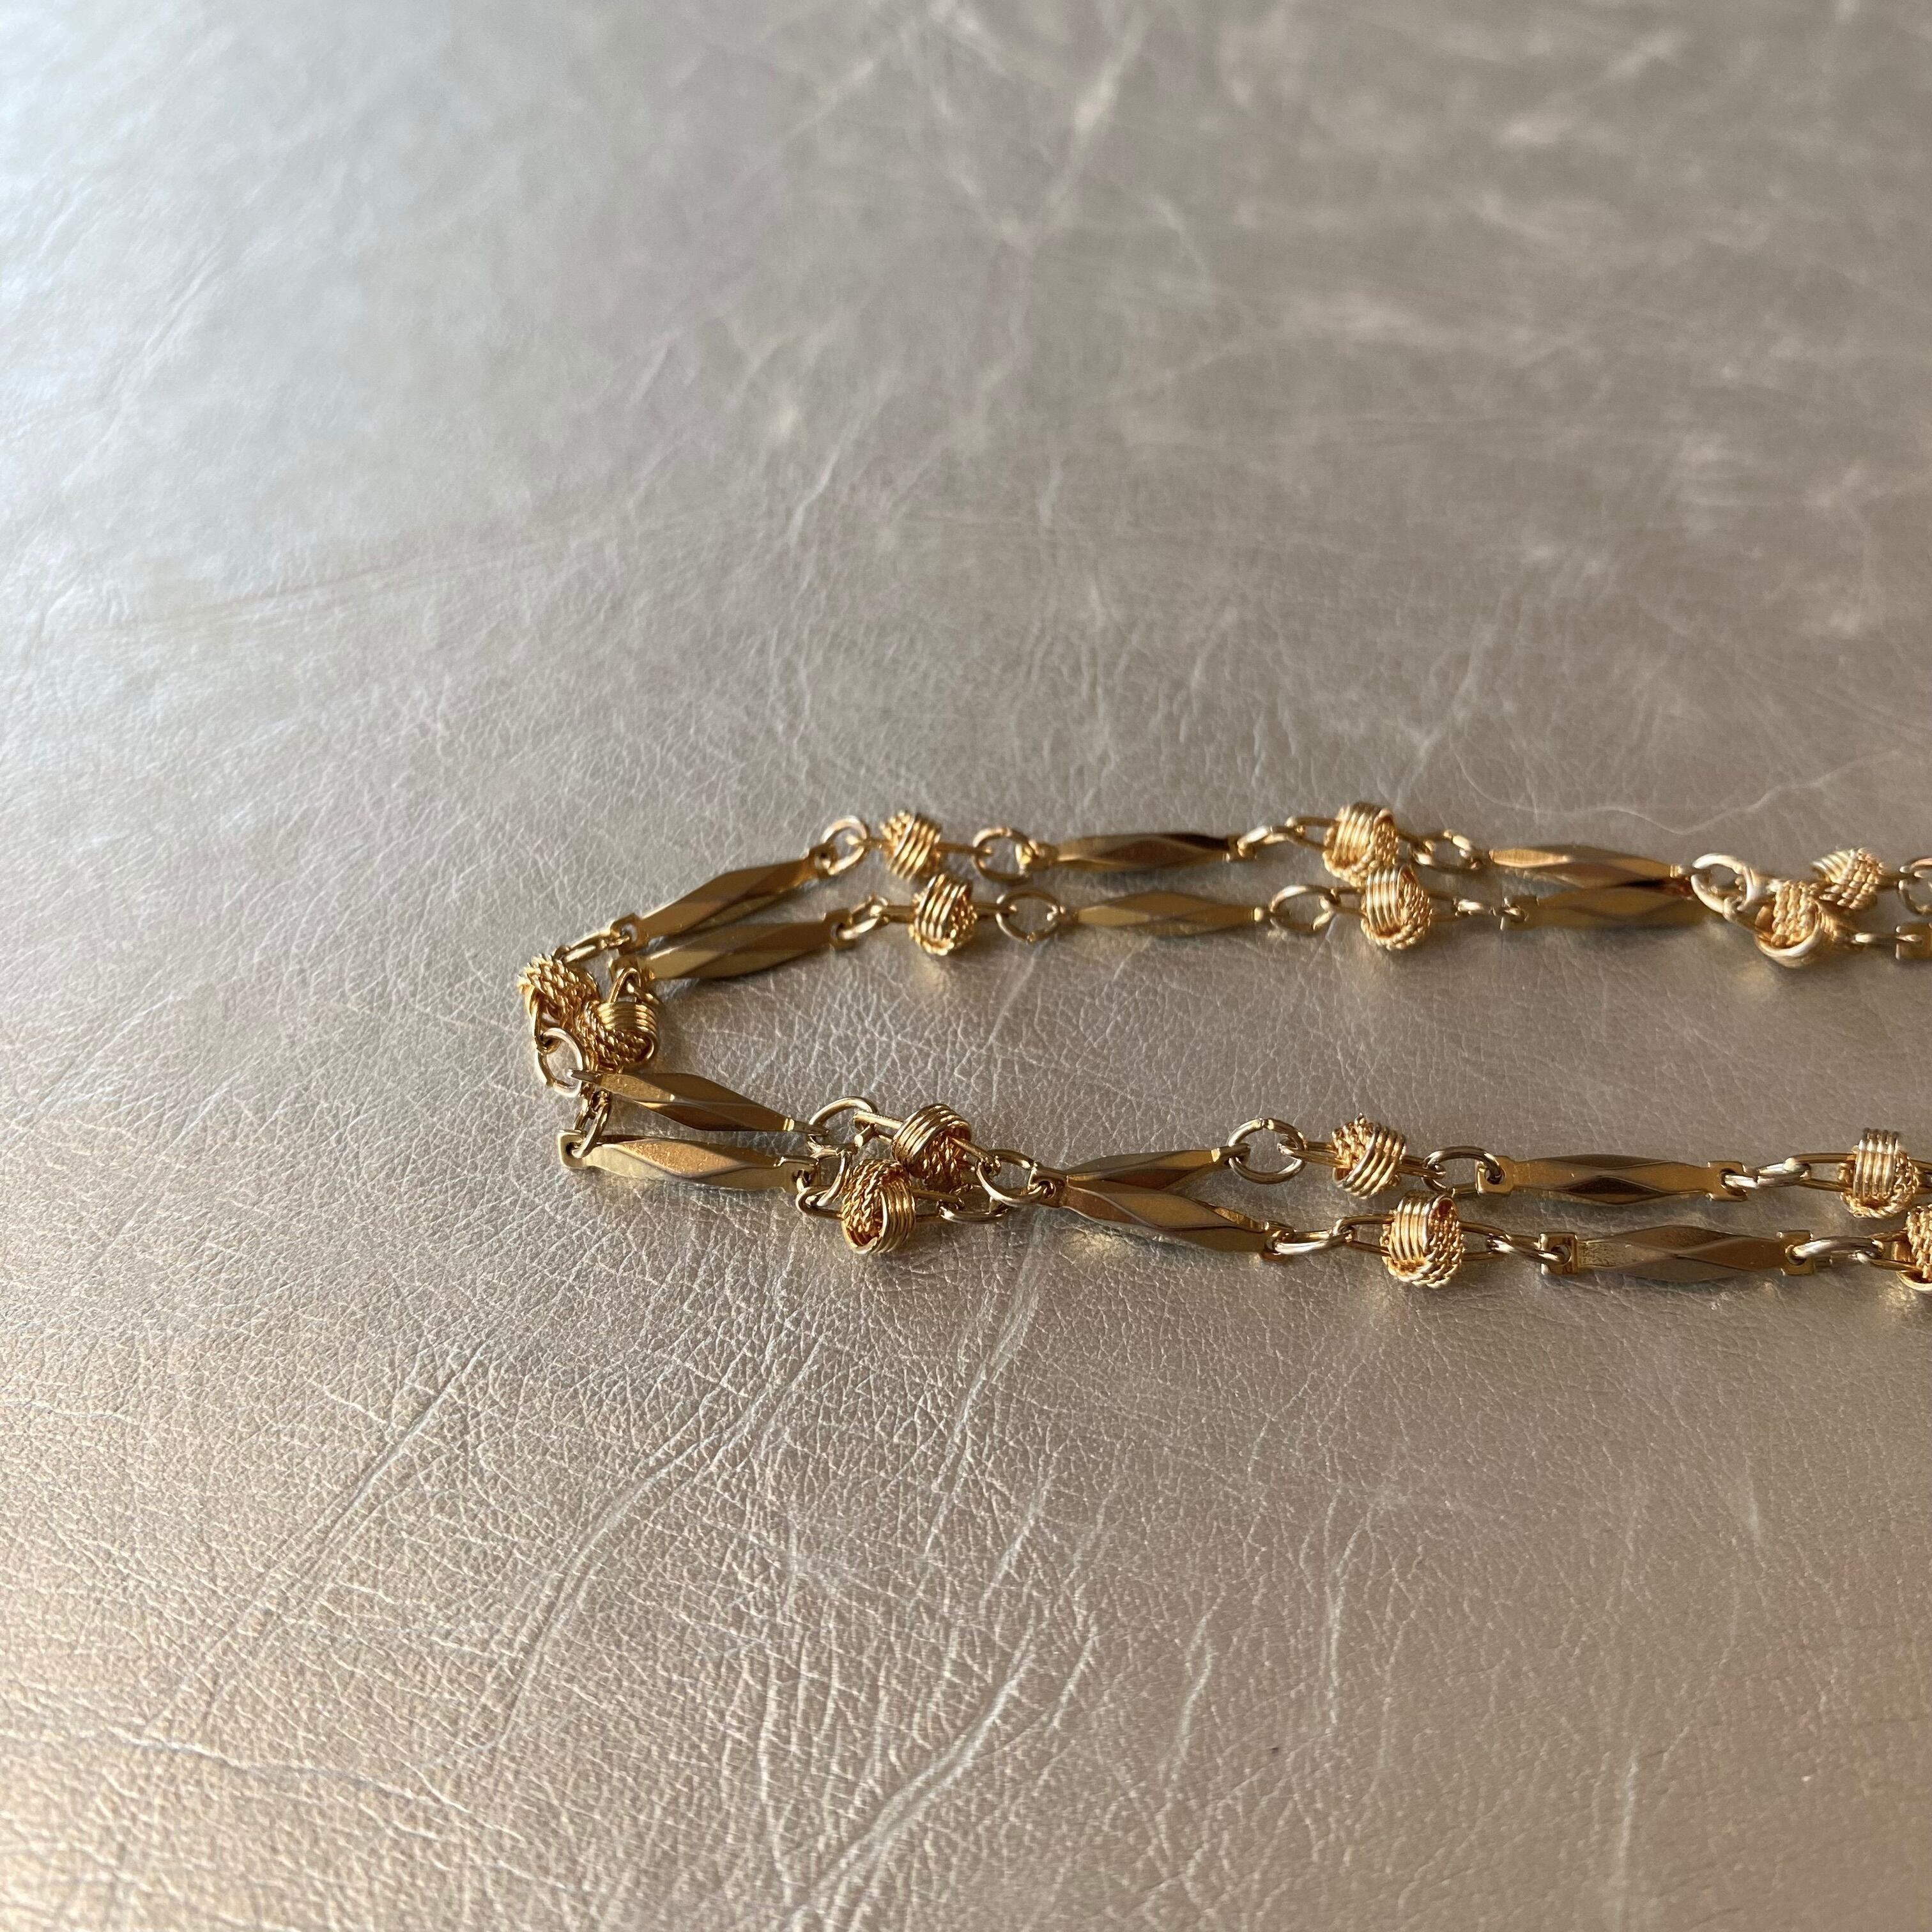 Vintage 80s retro double gold chain bracelet レトロ ヴィンテージ